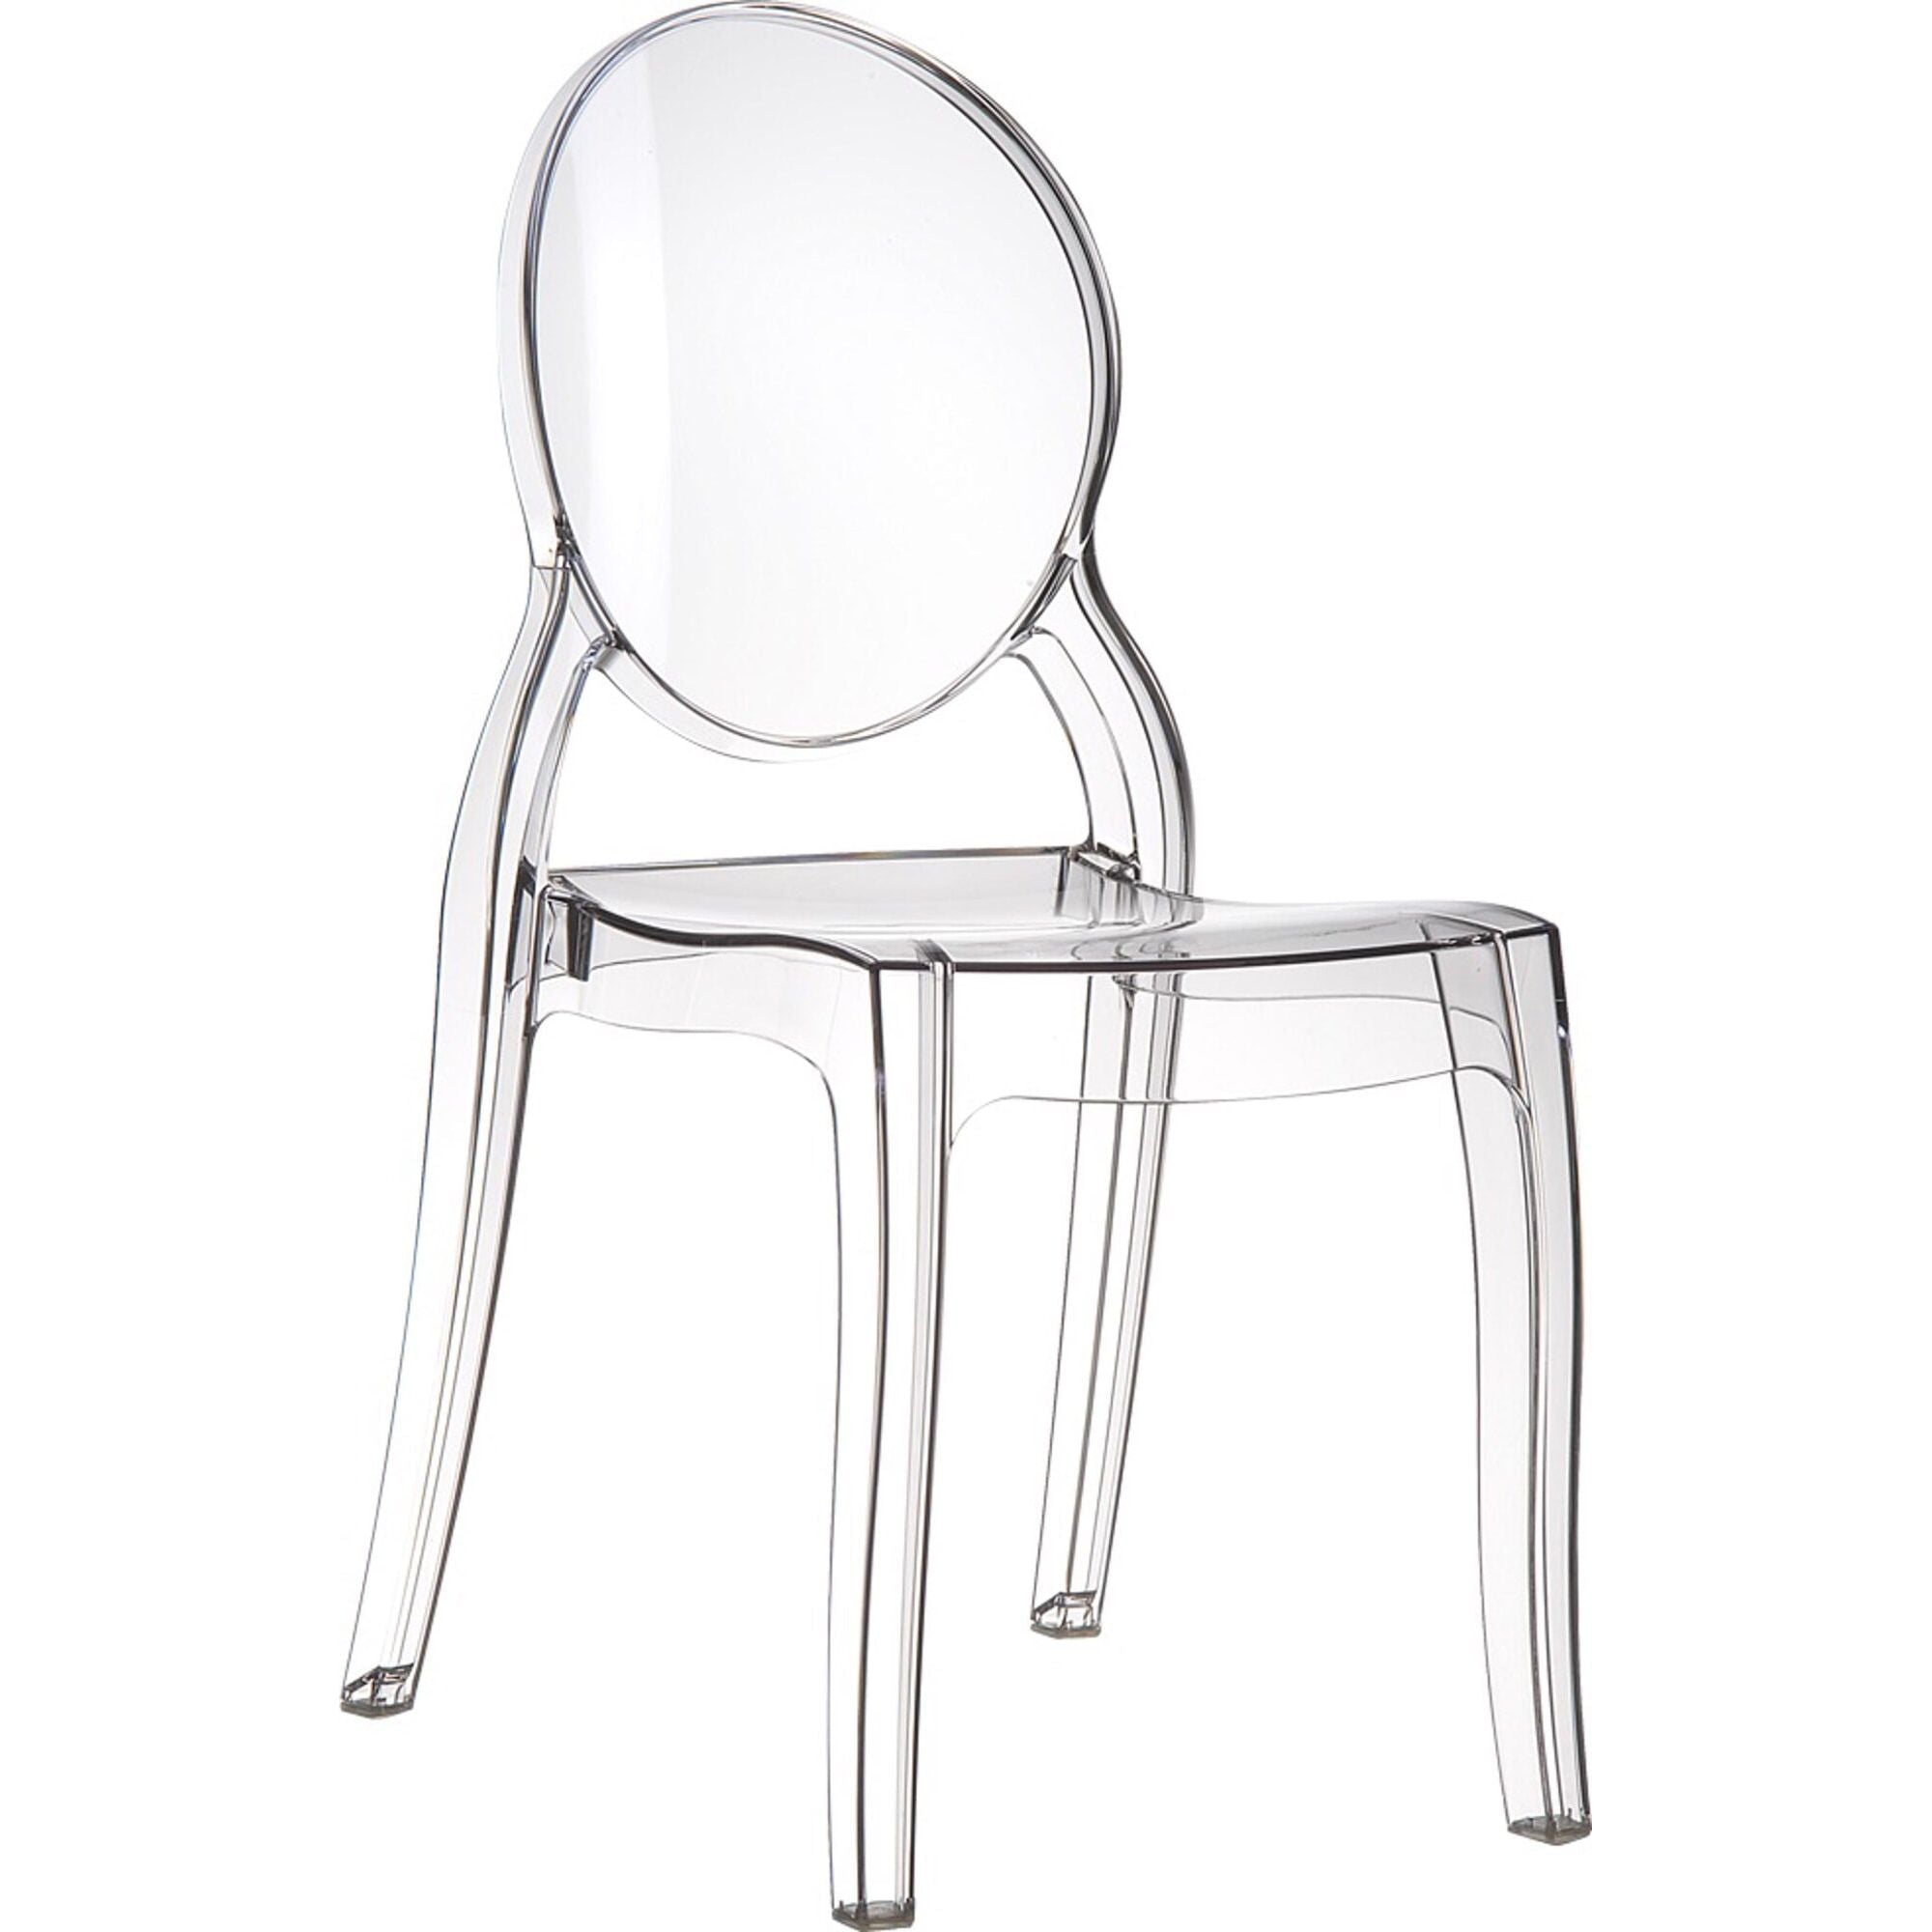 Garbar Mia chair inside, transparent outside